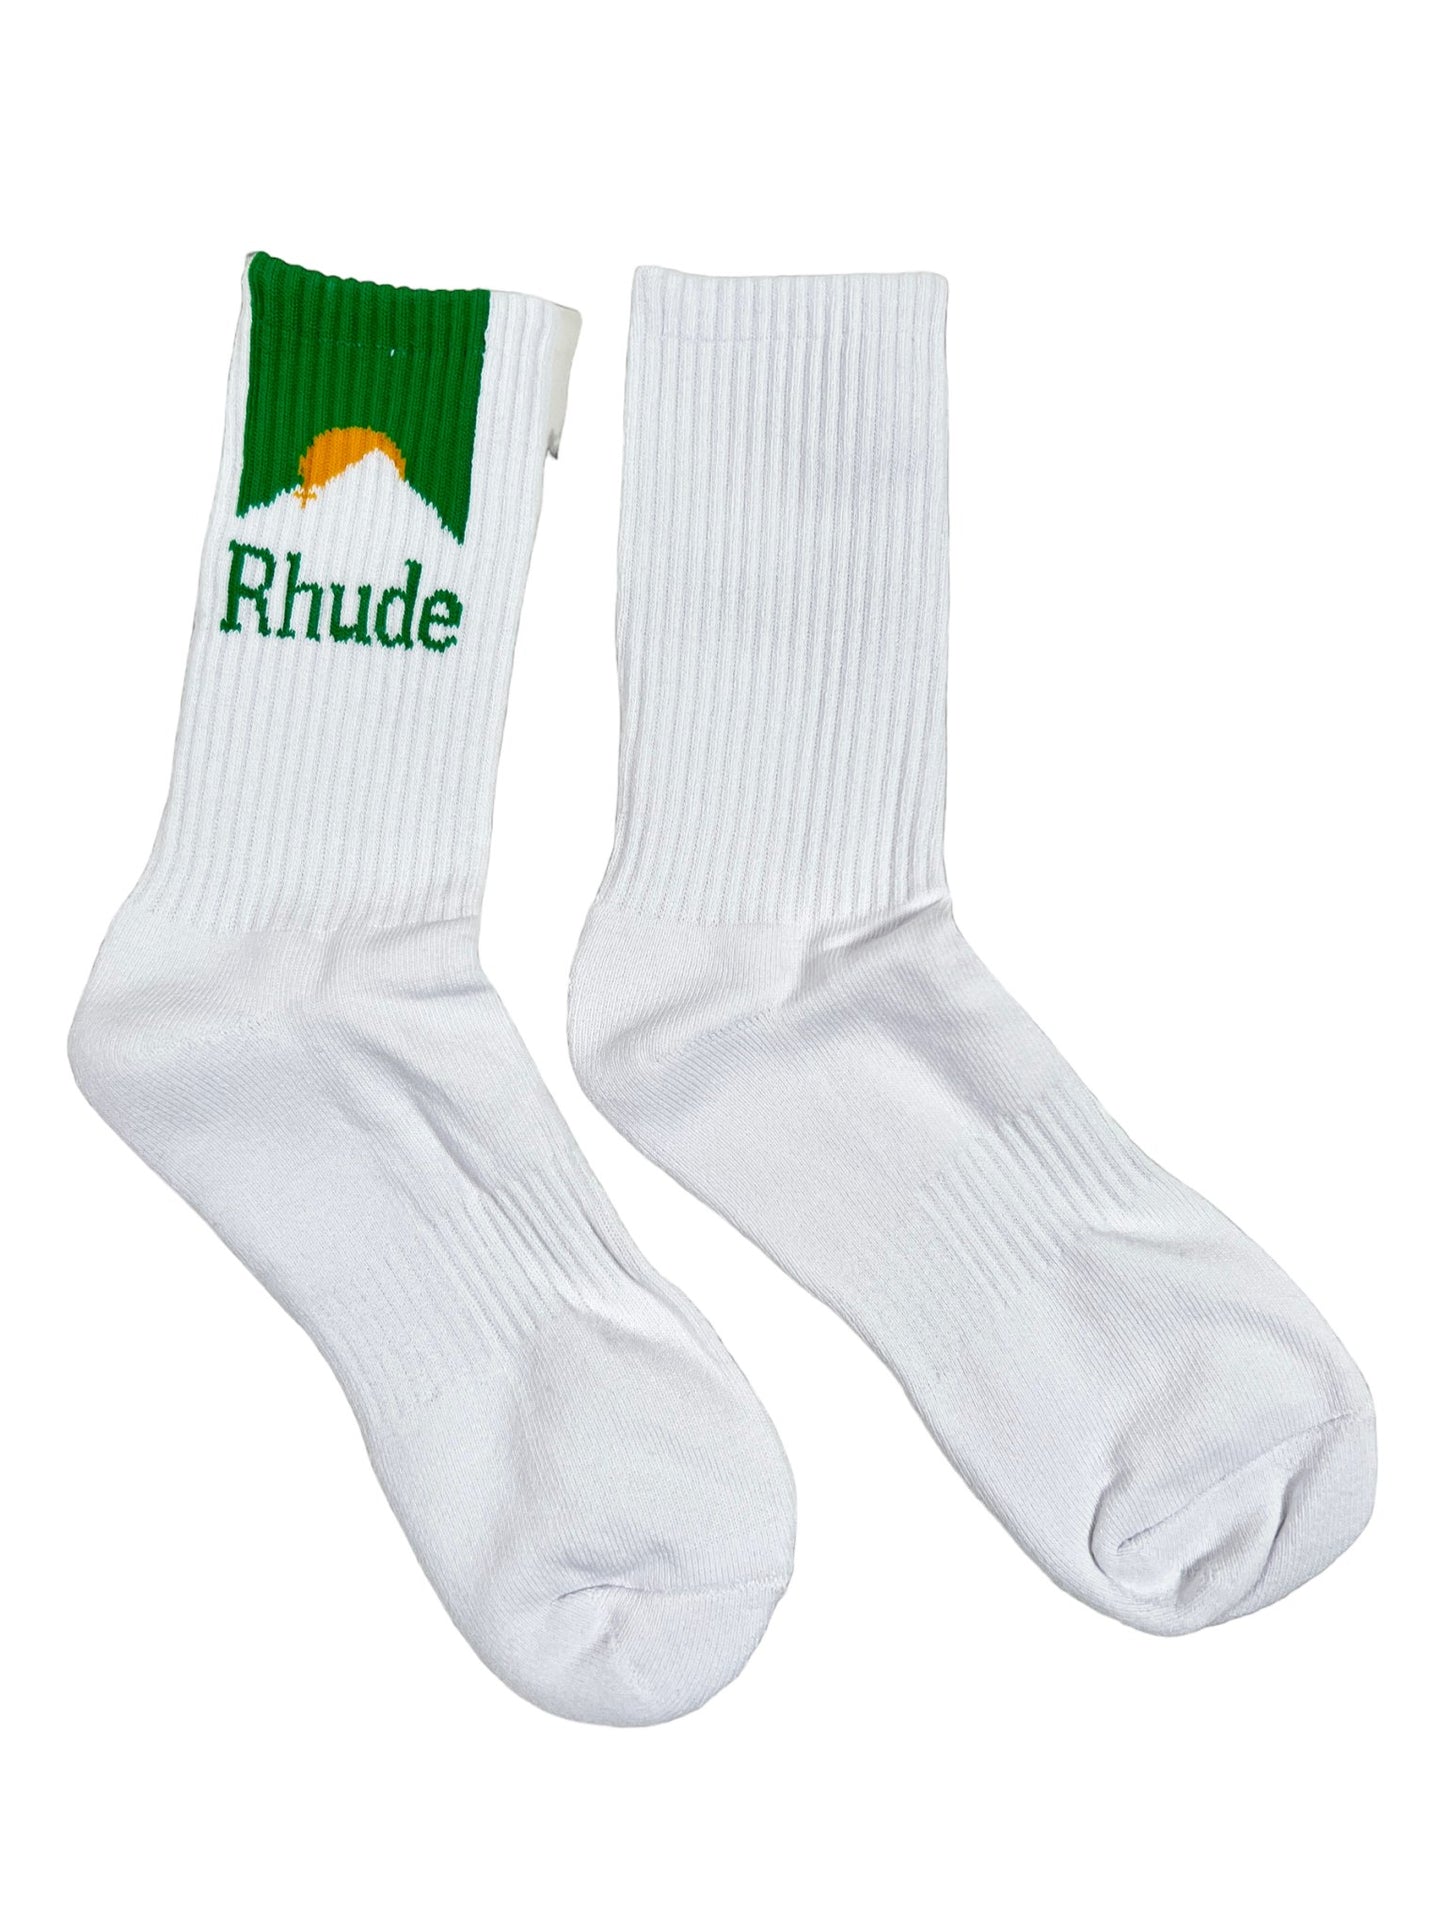 Probus RHUDE MOONLIGHT SOCK WHITE/GREEN/YELLOW RHUDE MOONLIGHT SOCK WHITE/GREEN/YELLOW O/S